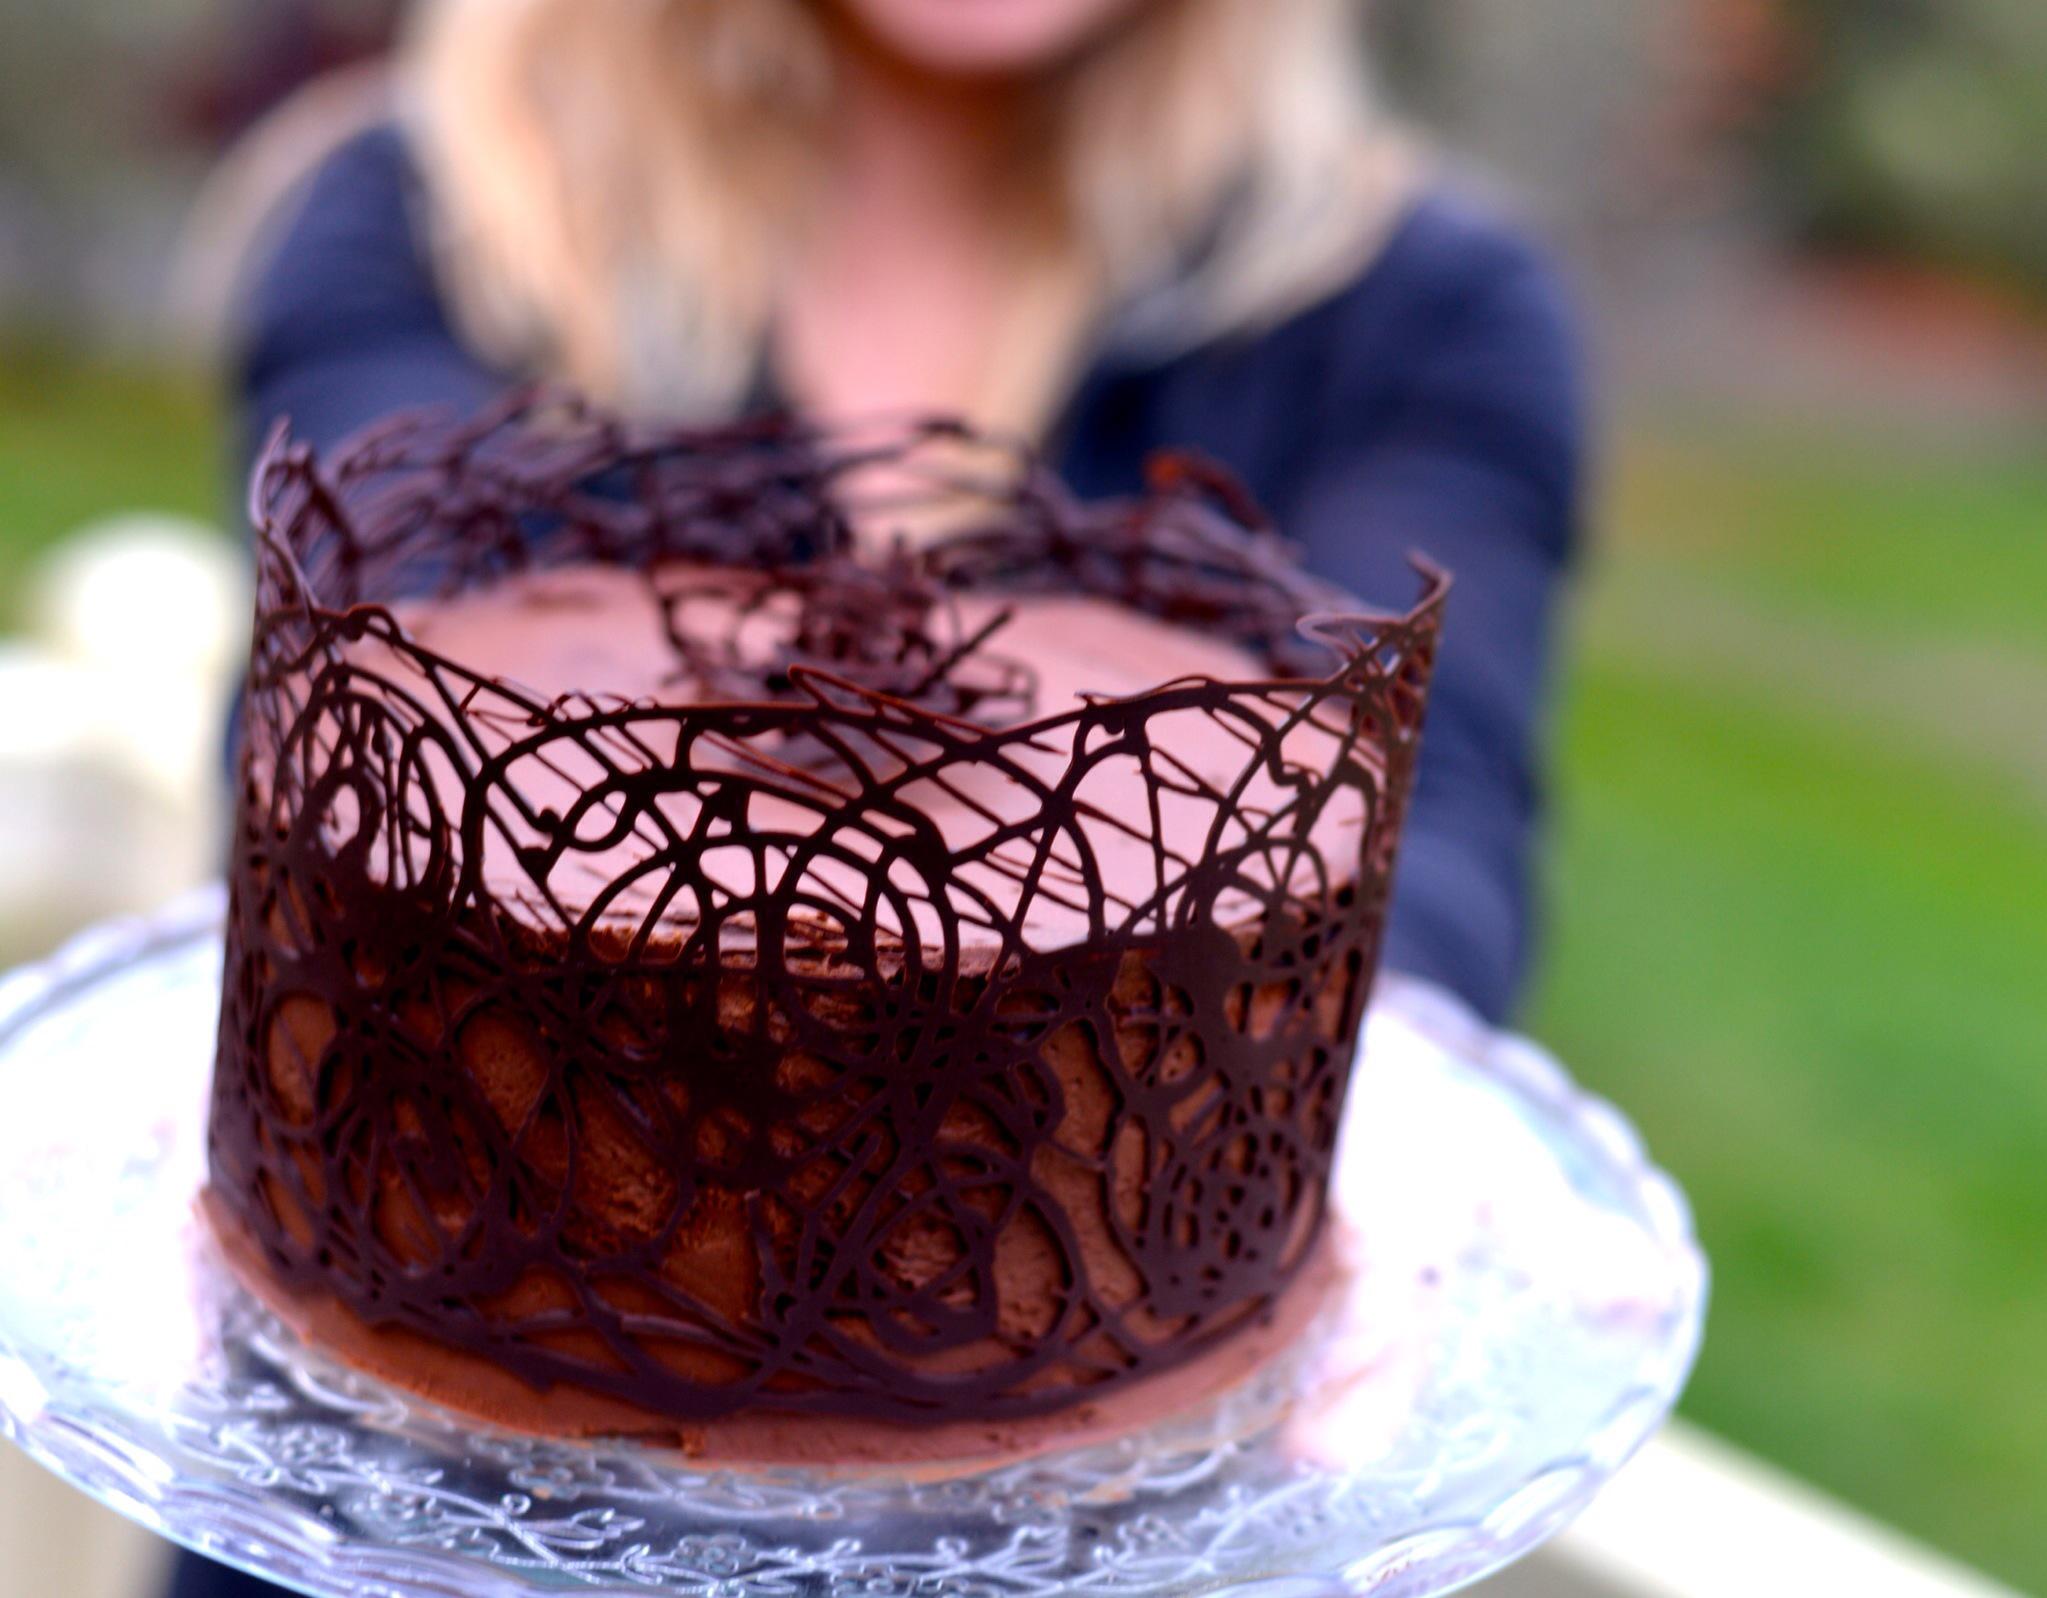 Fancy Chocolate Cake Decorating Ideas | So Yummy Chocolate Cake Recipes |  Top Yummy Cake - YouTube